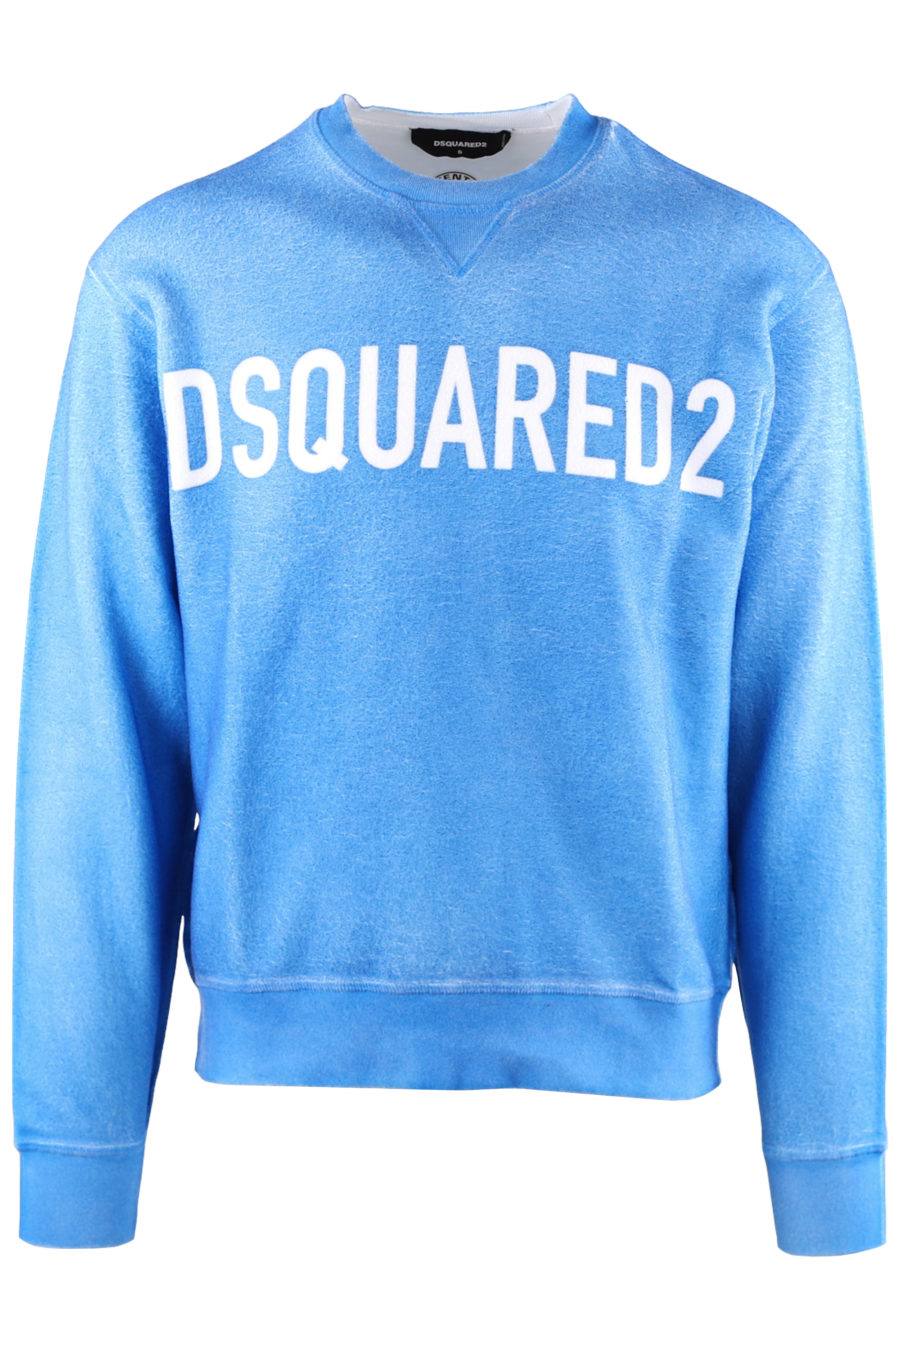 Blaues Fleece-Sweatshirt mit weißem Logo - b301d3e2cabc2e4cadee6414c2952fdca7e505c4